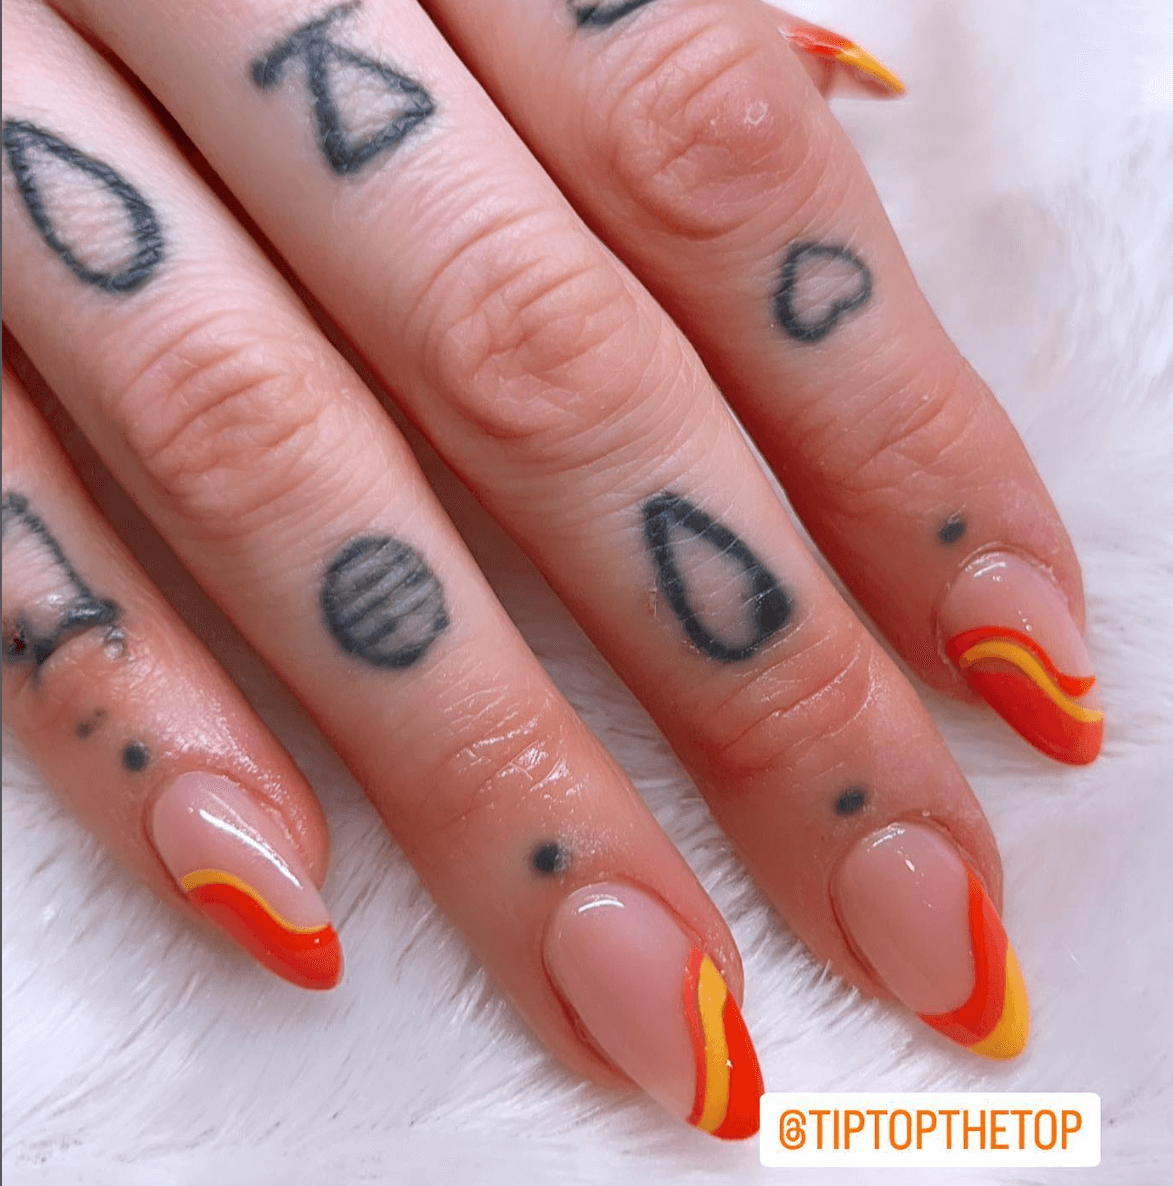 Nagels oranje met tattoos - Tip Top Nagels